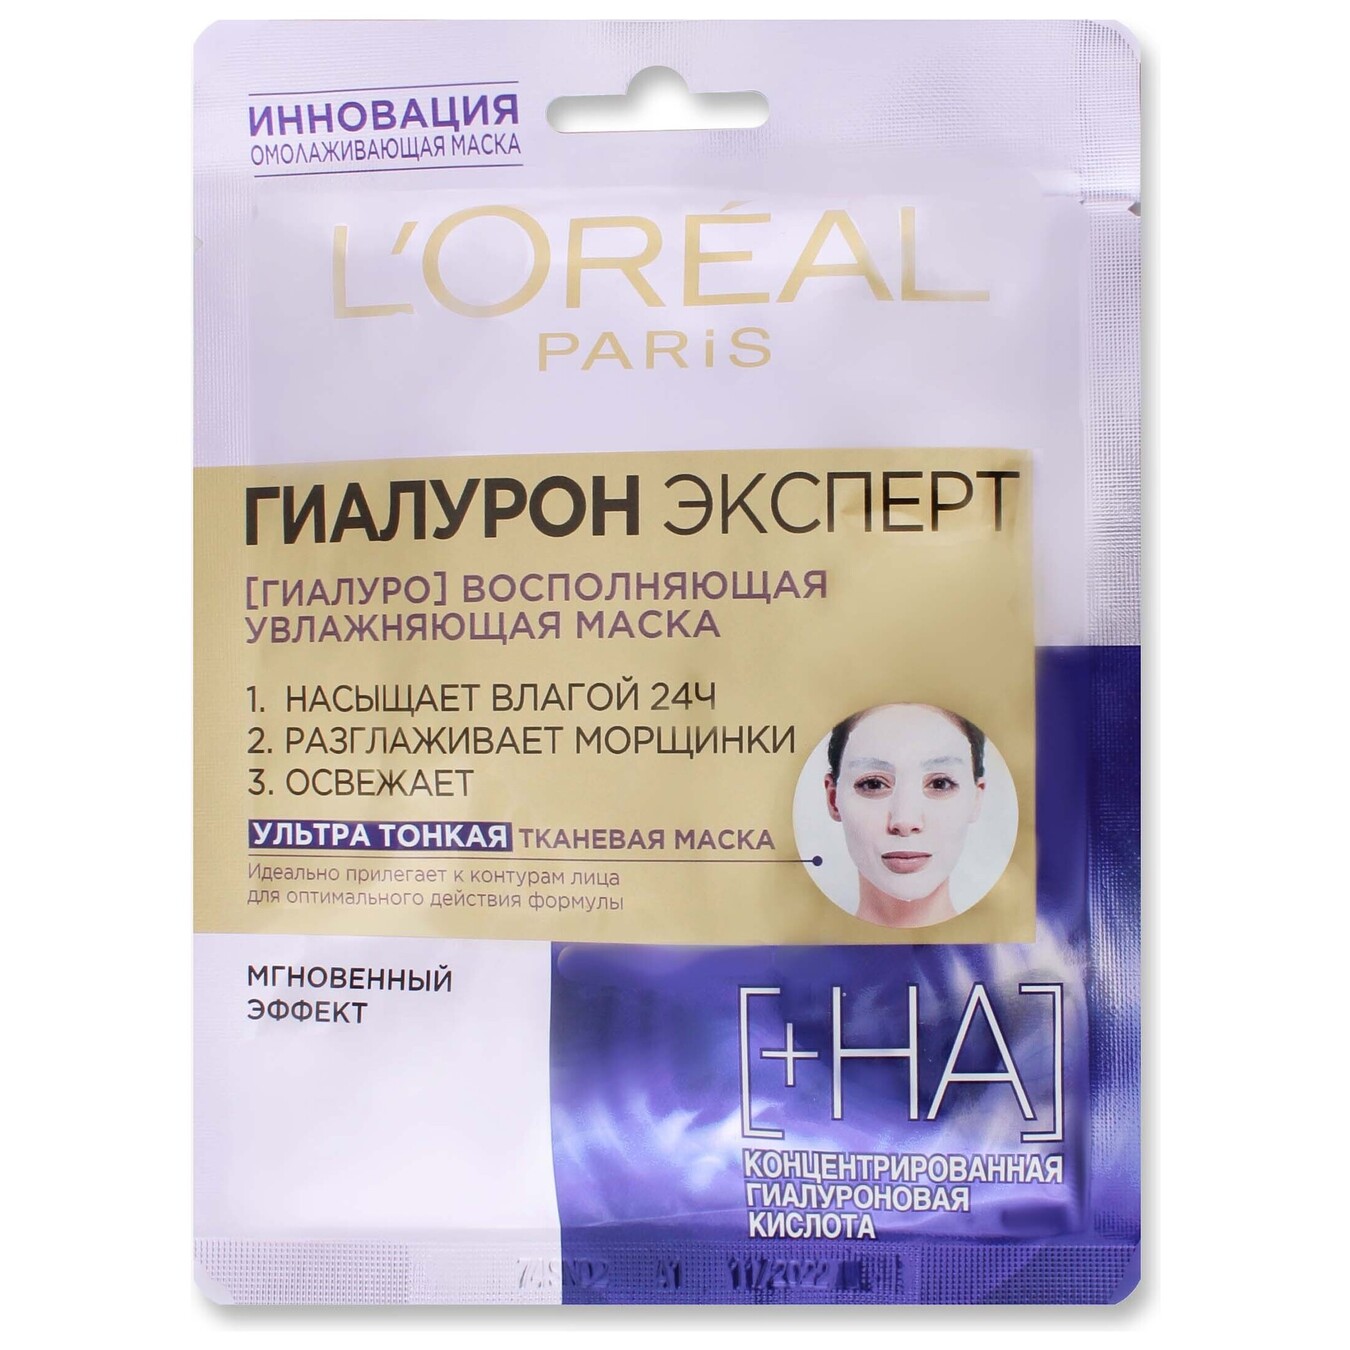 L'Oreal Paris Hyaluron expert moisturizing face mask 30g